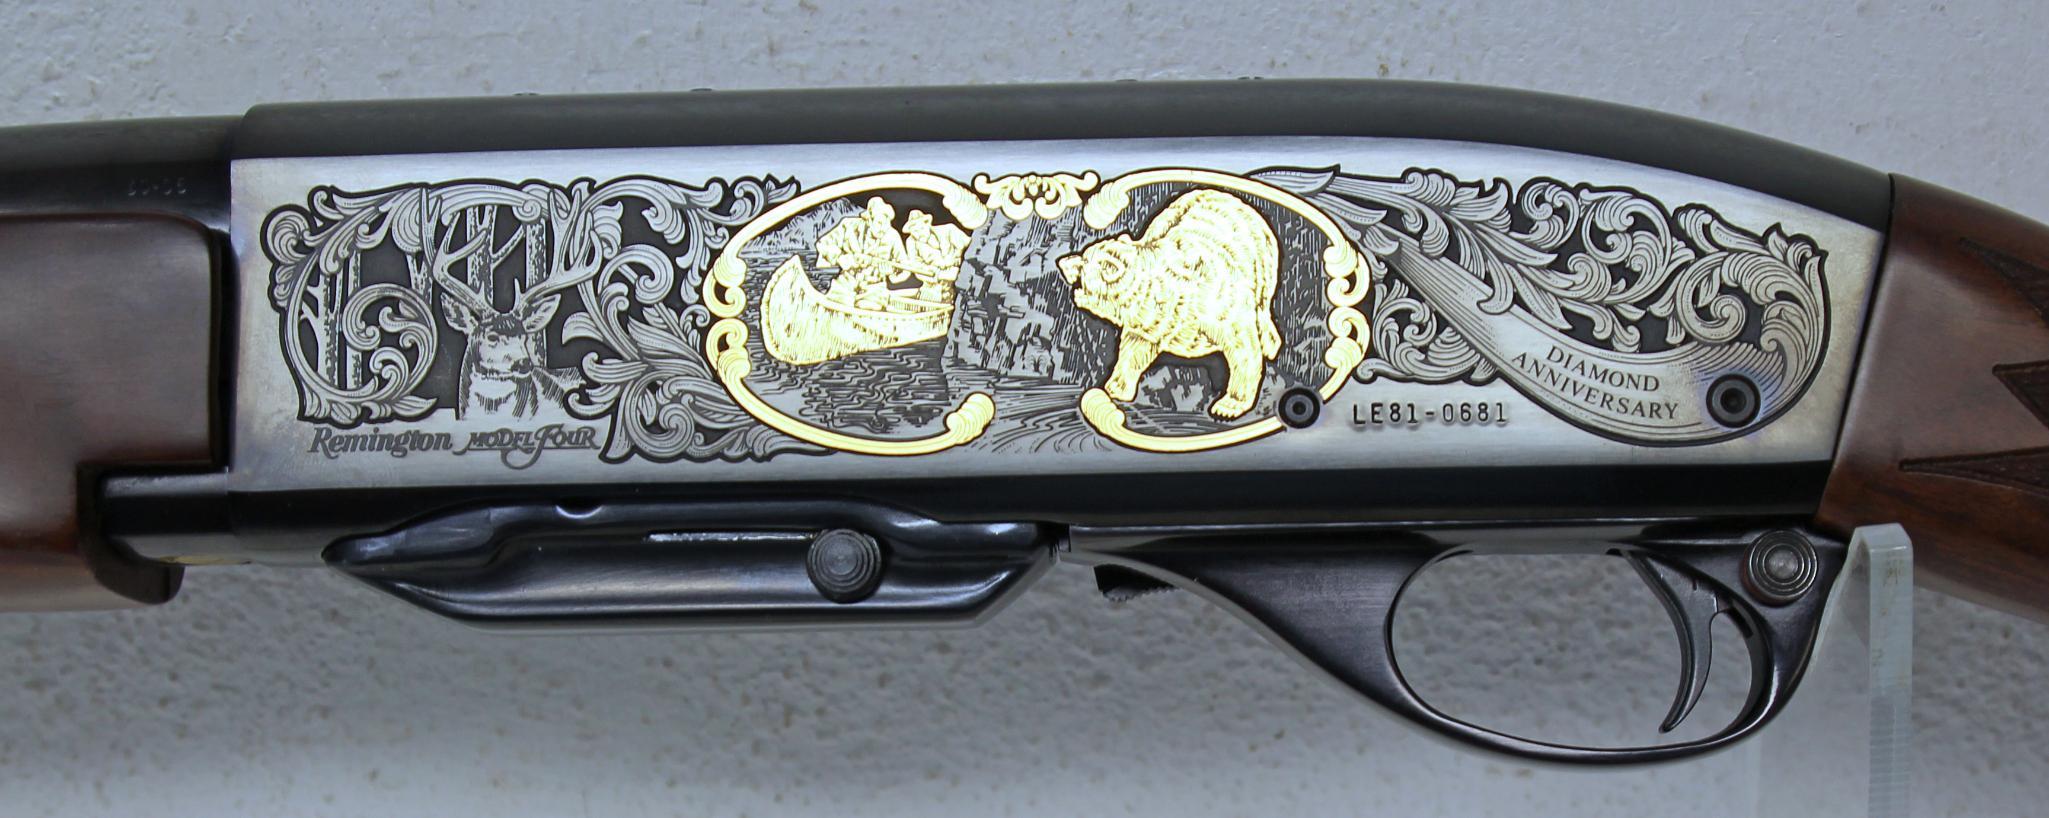 Remington Model 4 Diamond Anniversary .30-06 Semi-Auto Rifle, Limited Edition 1 of 1500, 1981